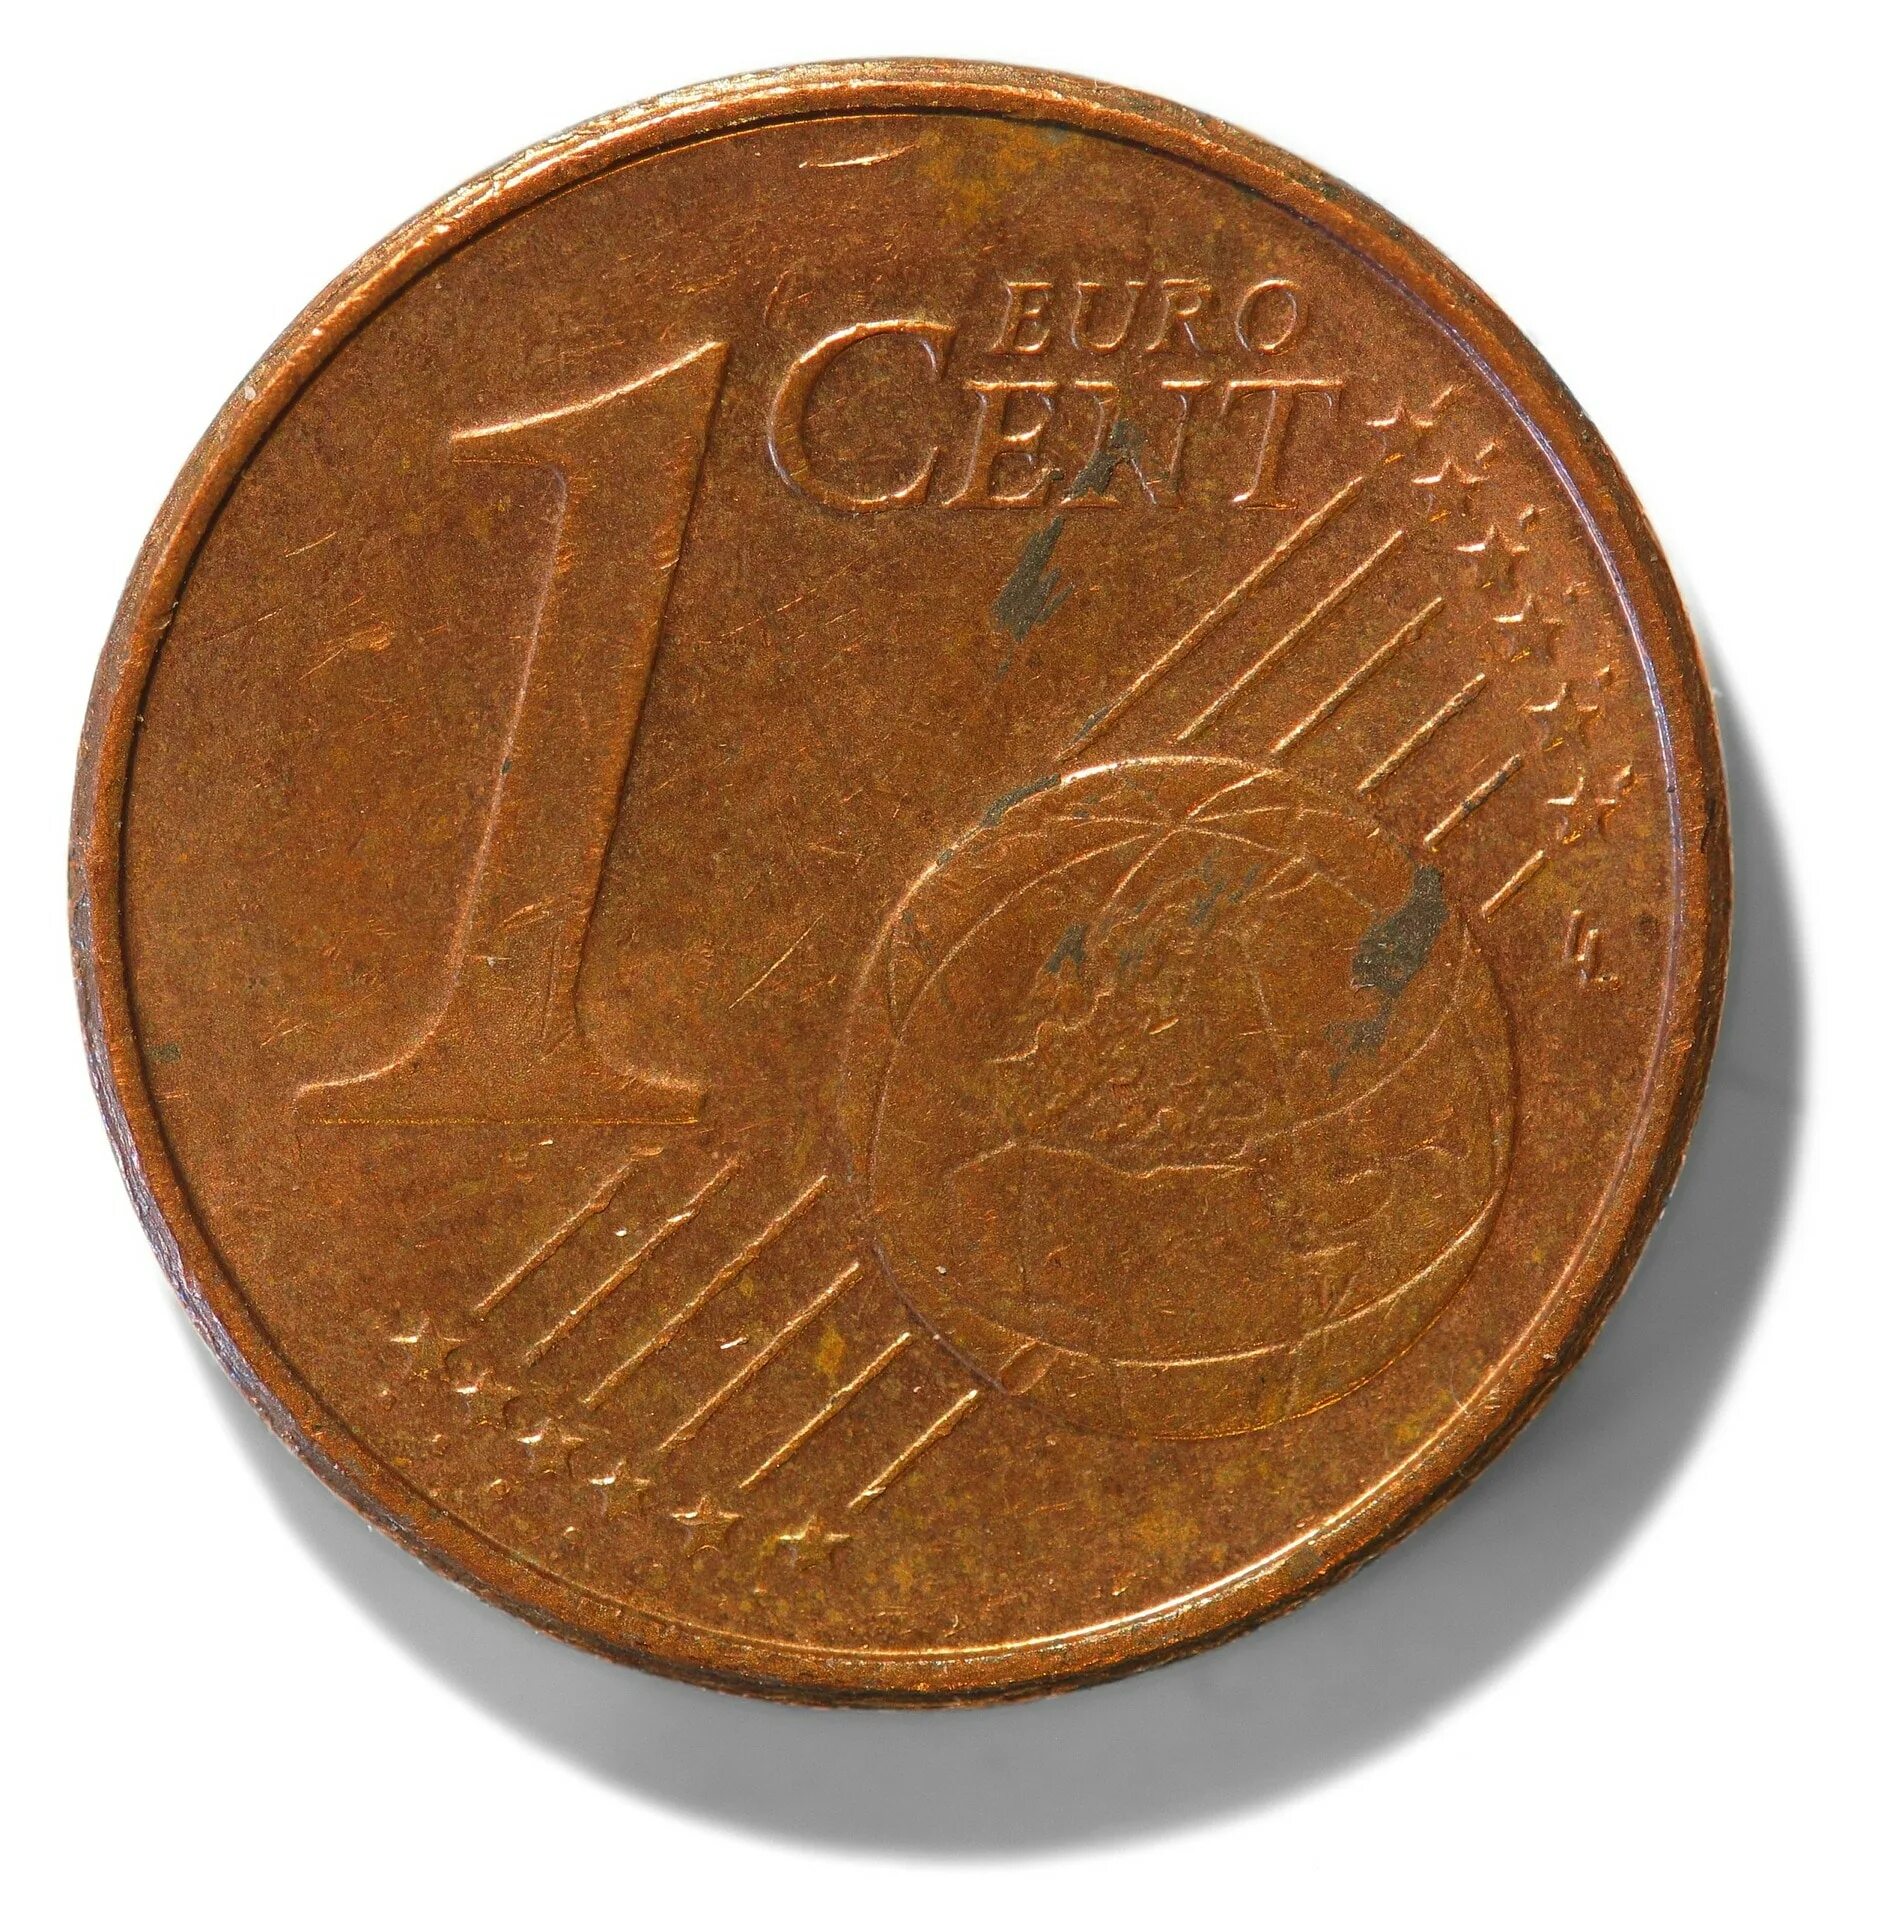 1 cent. 1 Евроцент 2002. Монета евро цент. Монета один евро цент. 1 Евроцент Германия 2005.